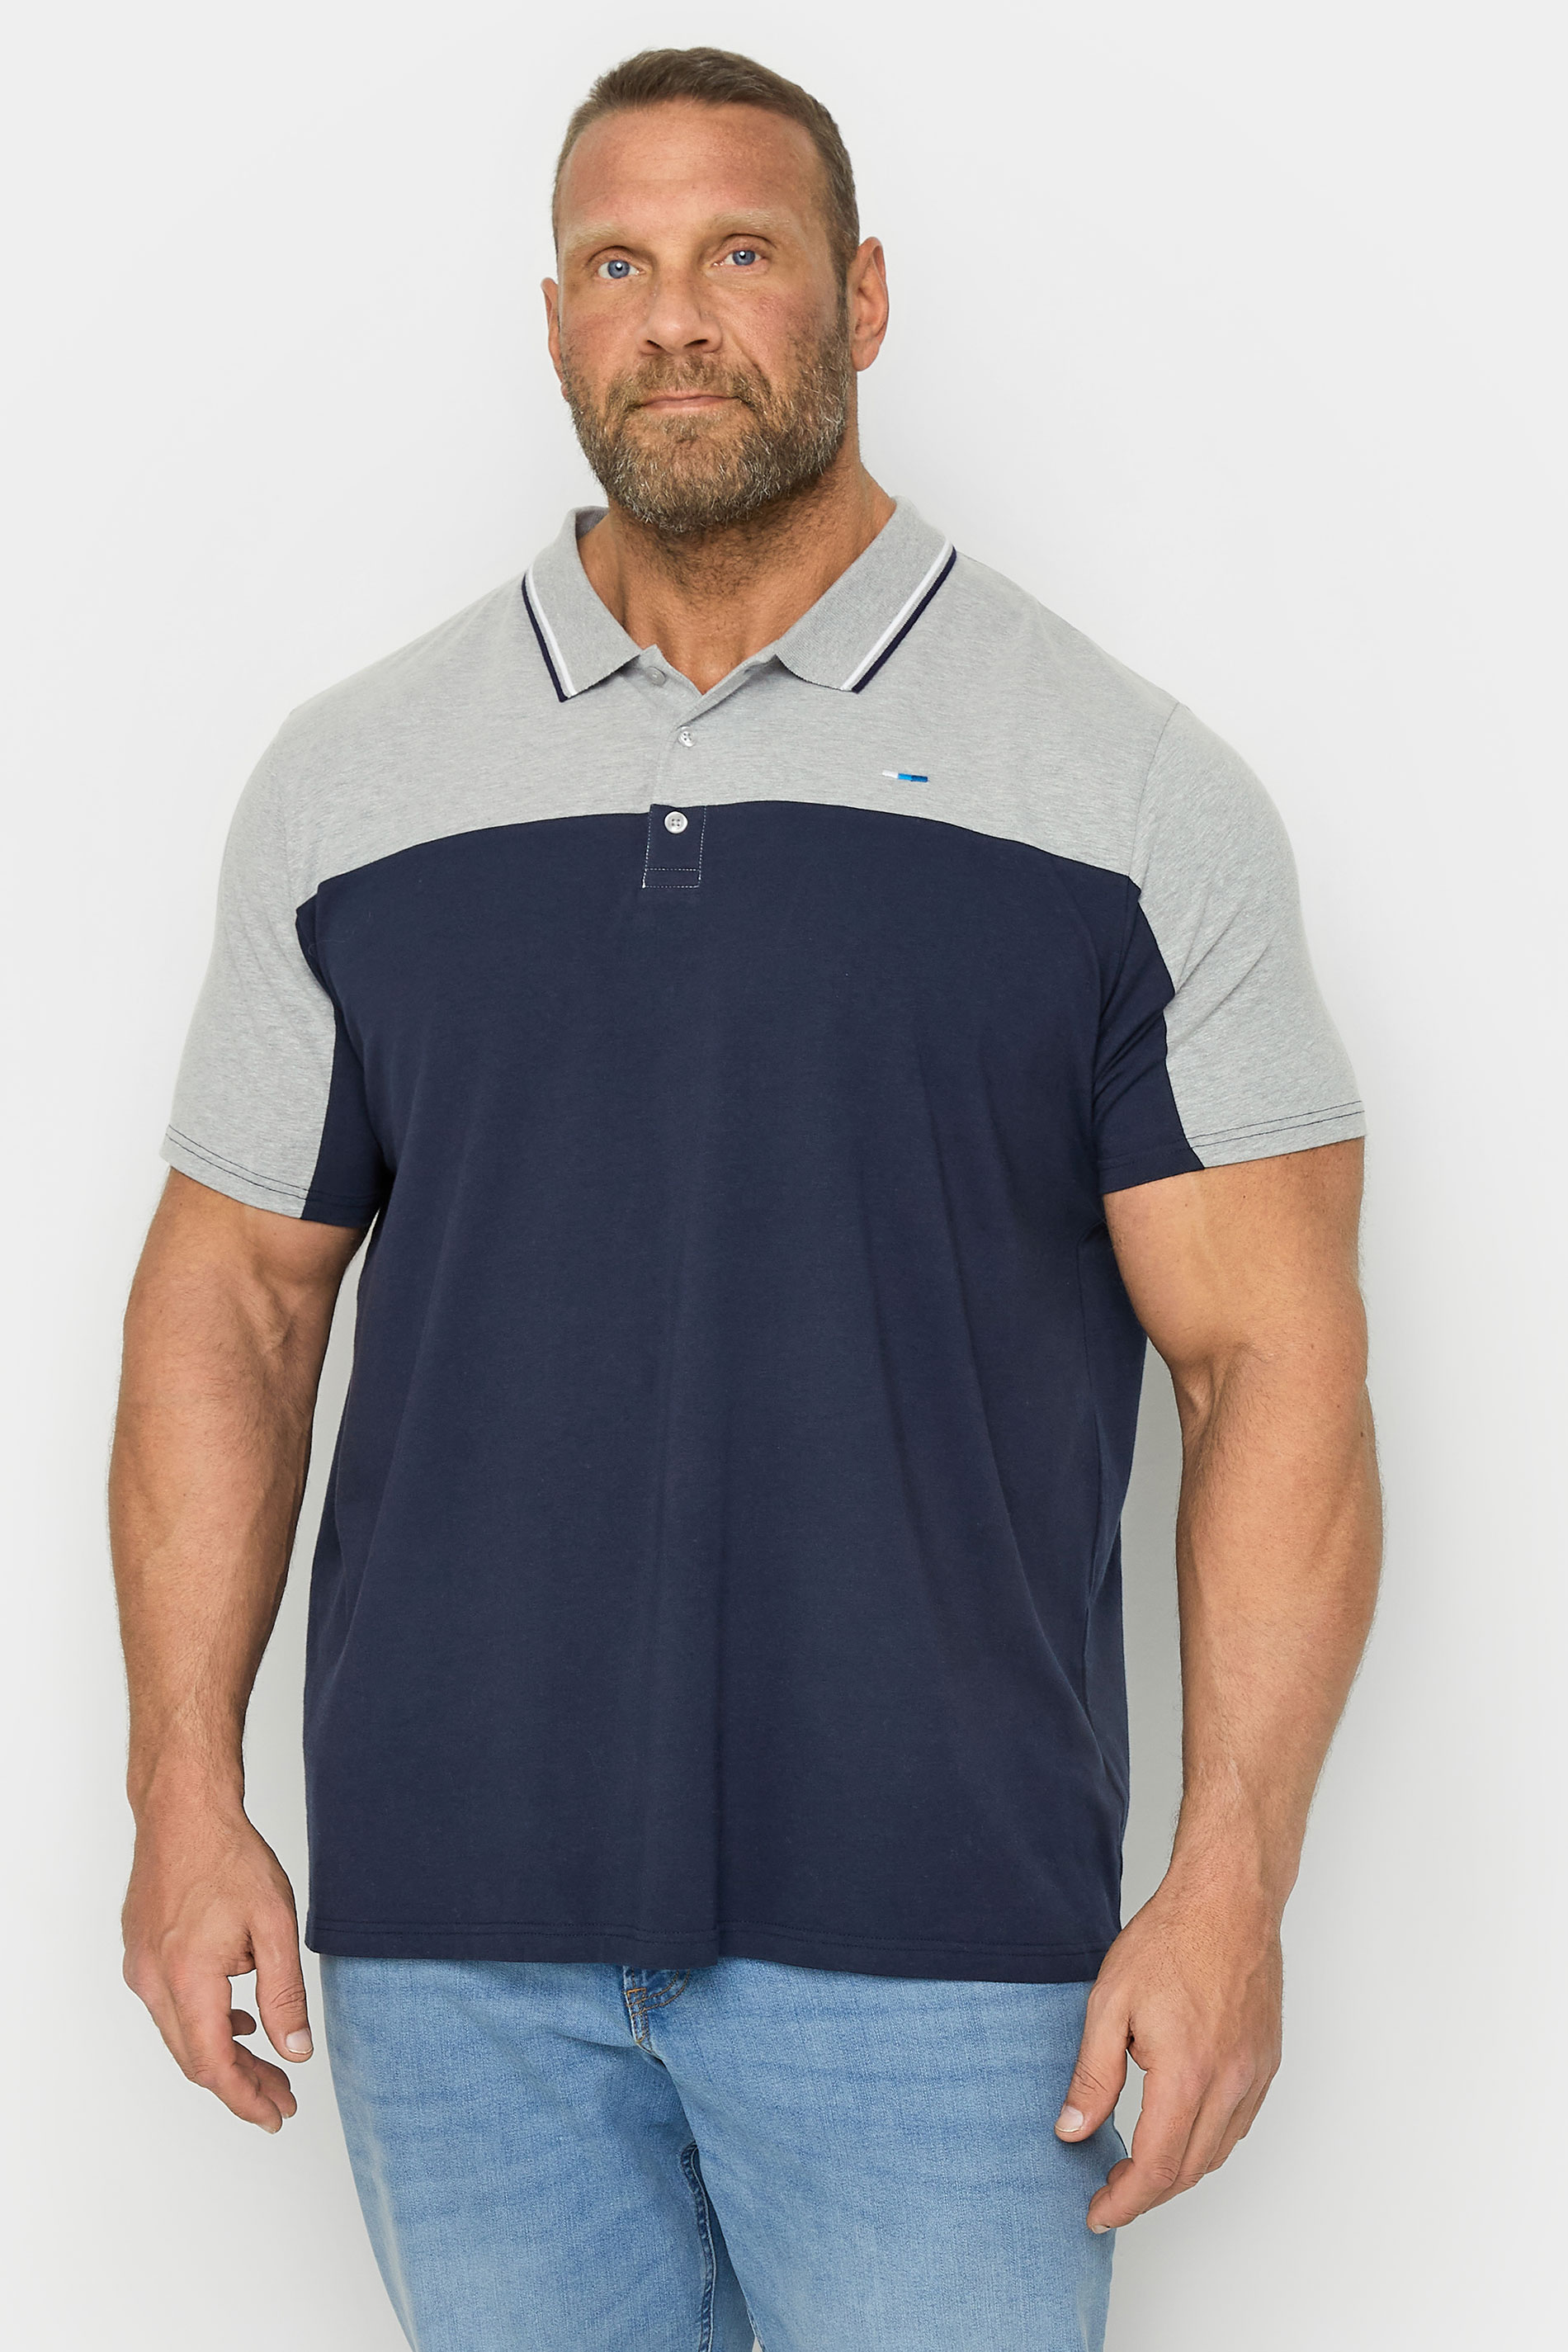 BadRhino Big & Tall Navy Blue & Grey Cut & Sew Jersey Polo Shirt | BadRhino 1